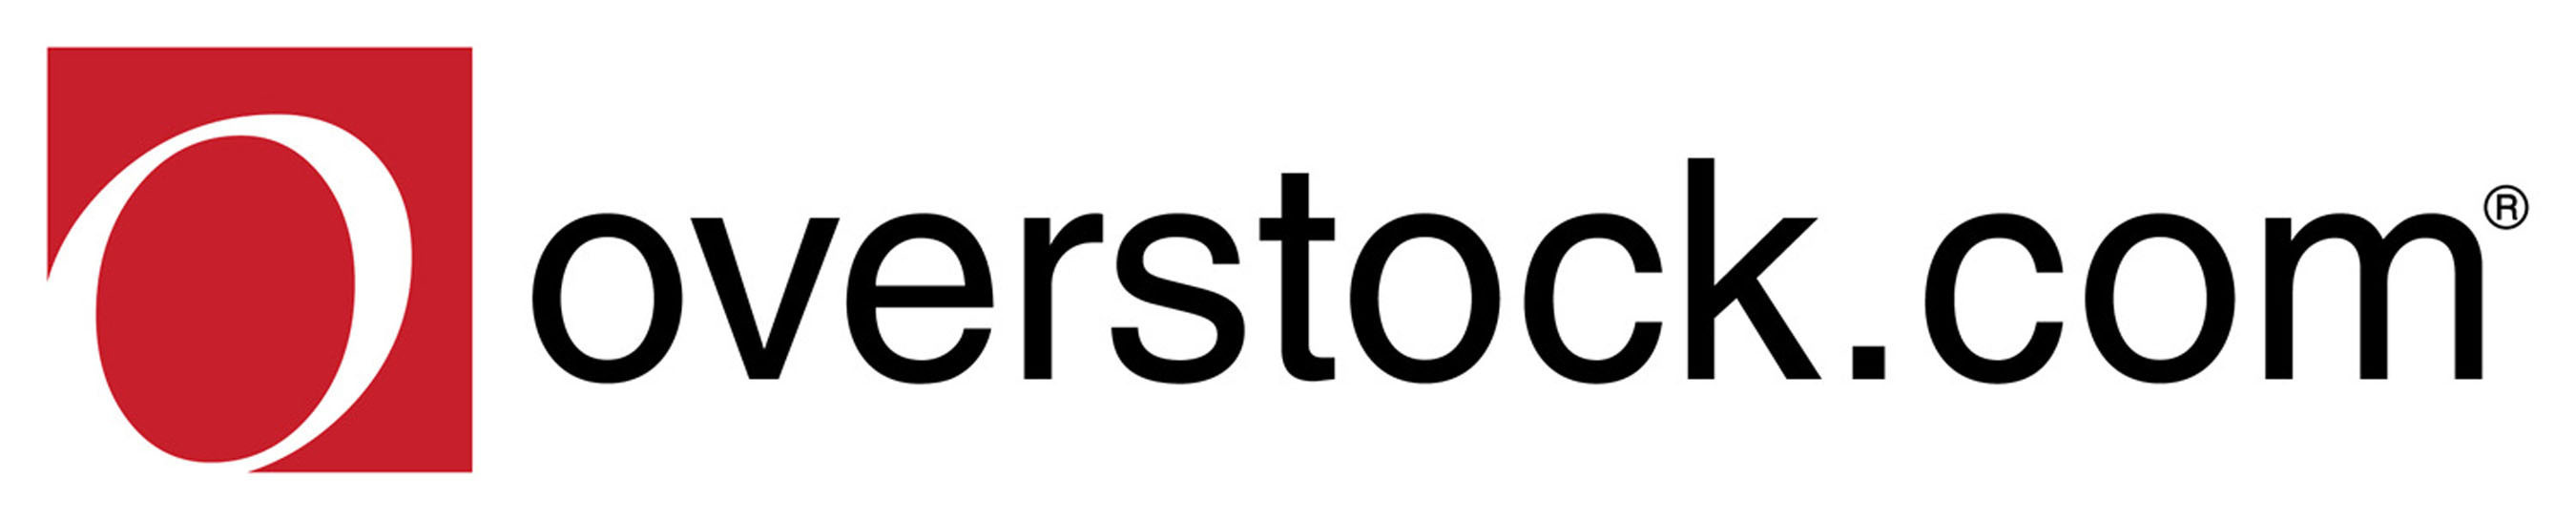 OverStock.com